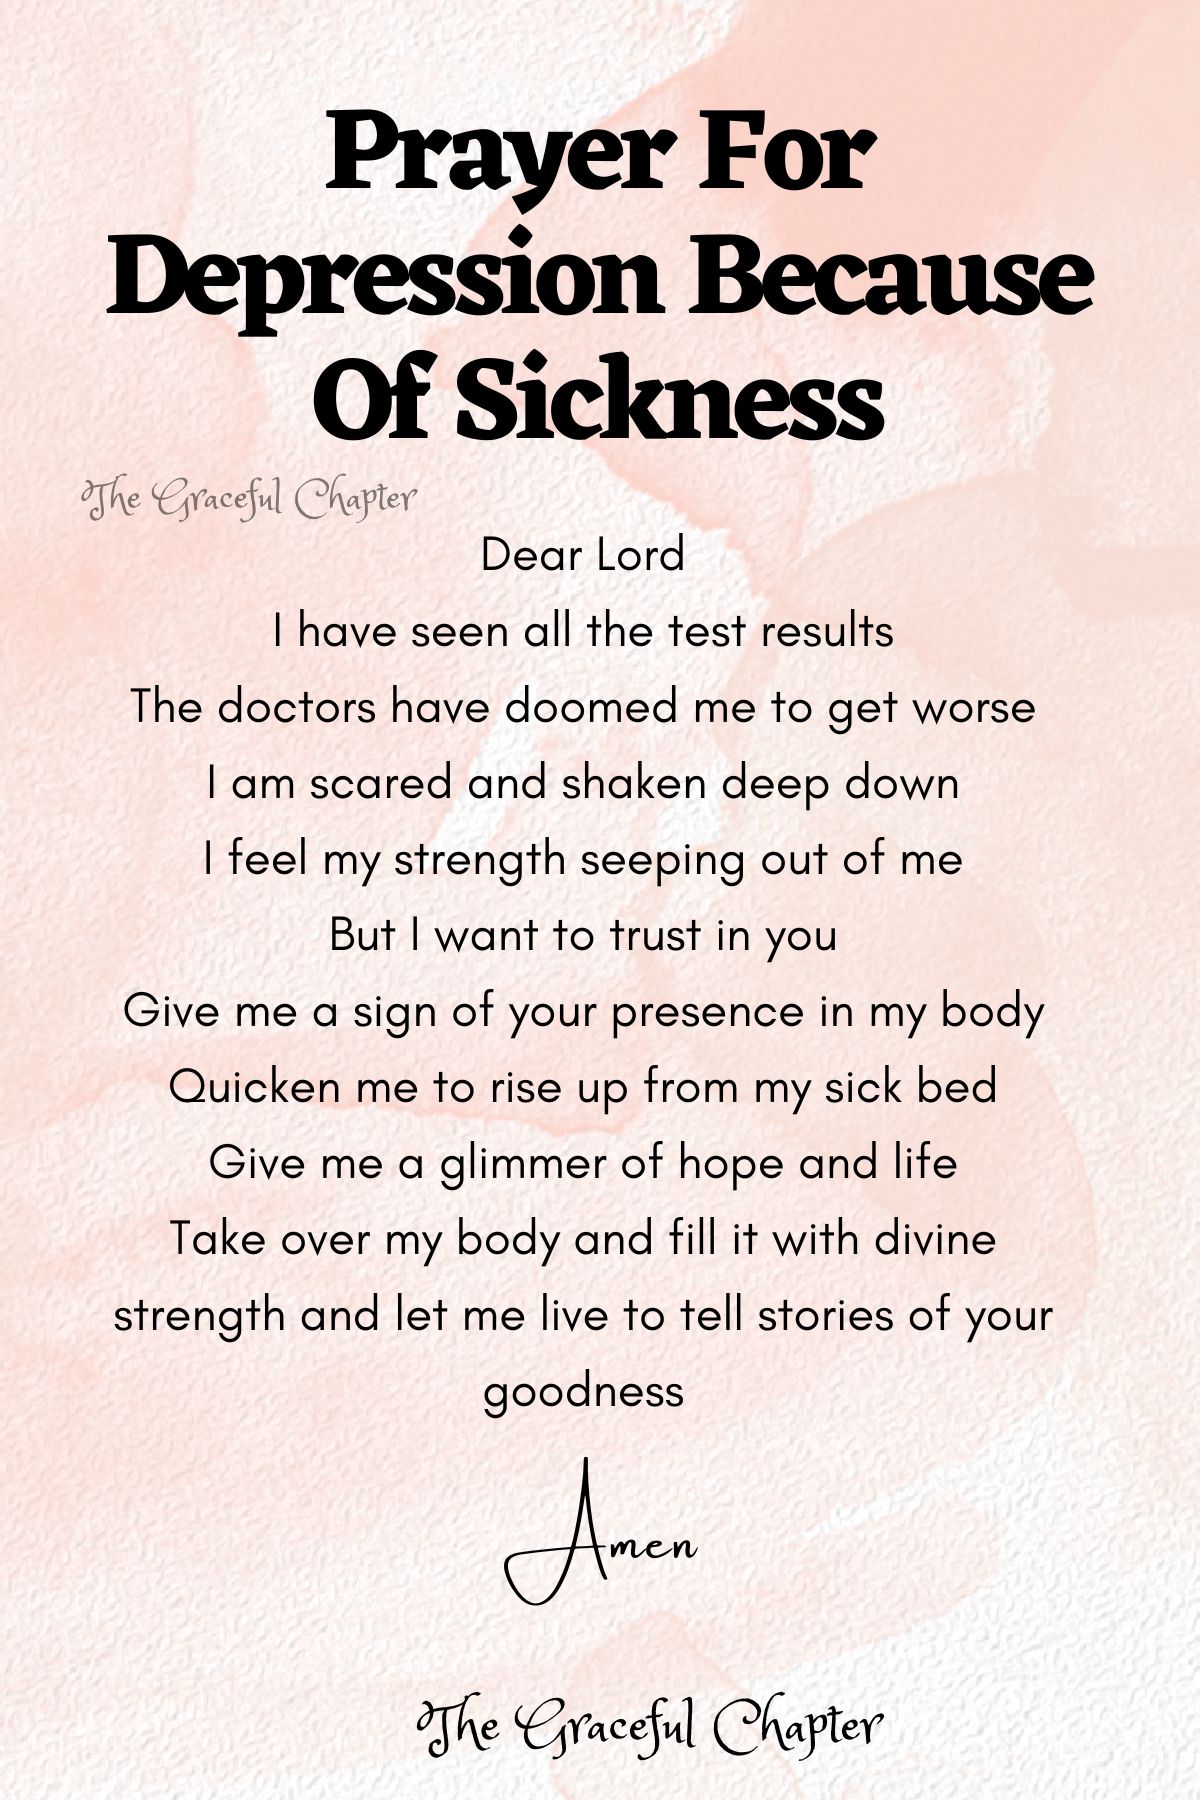 Depression because of sickness